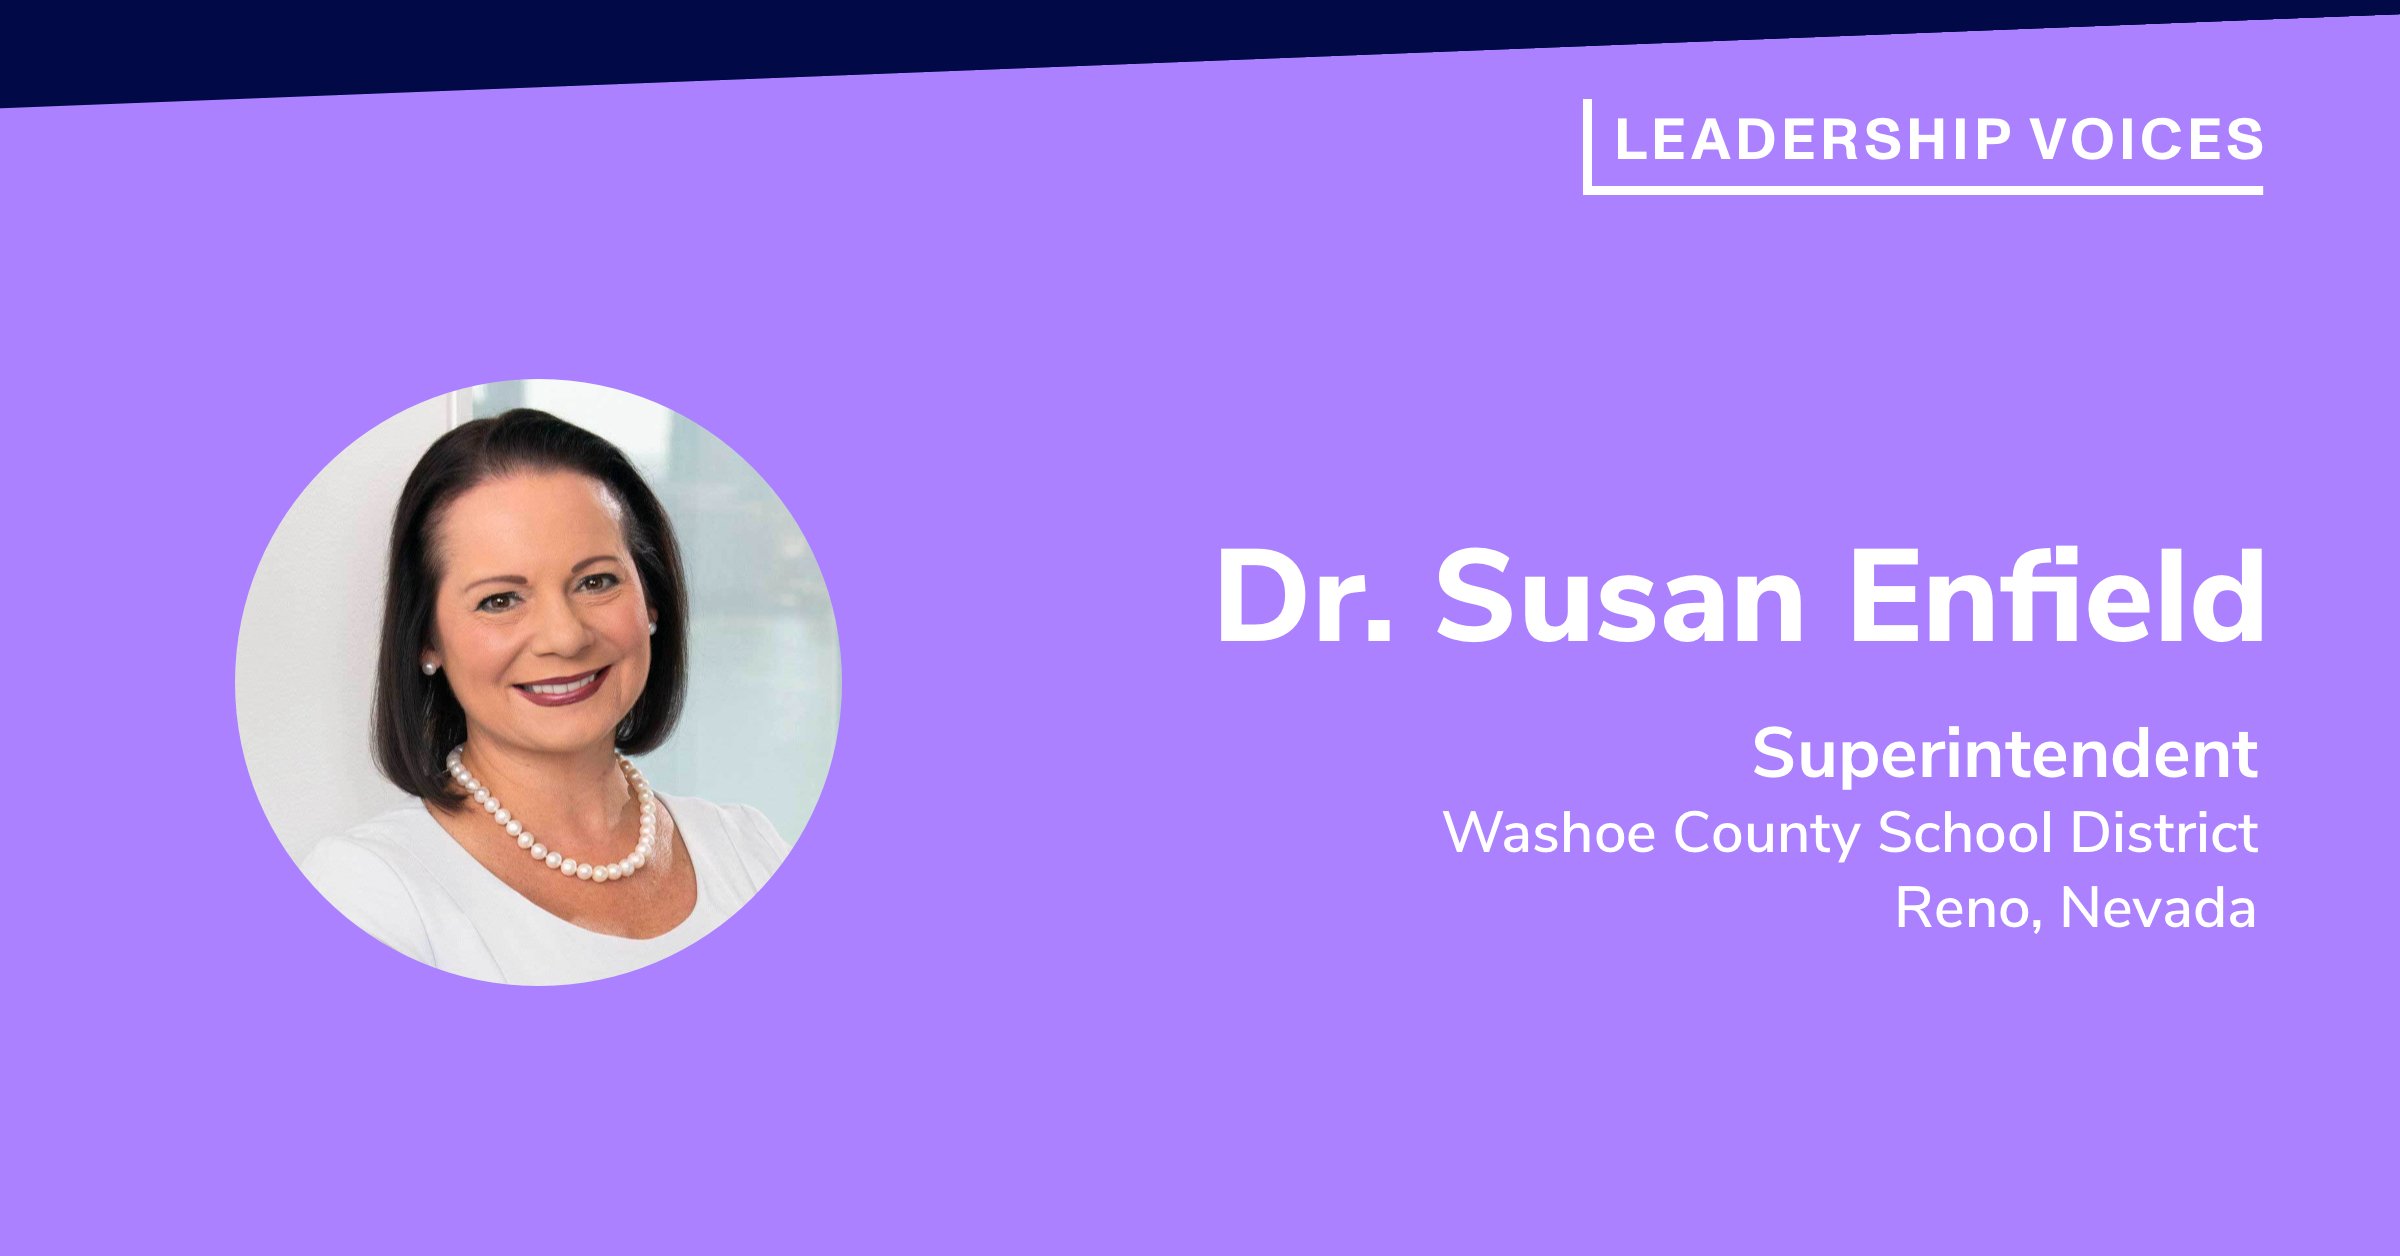 Dr. Susan Enfield: Superintendent, Washoe County School District, Reno, Nevada